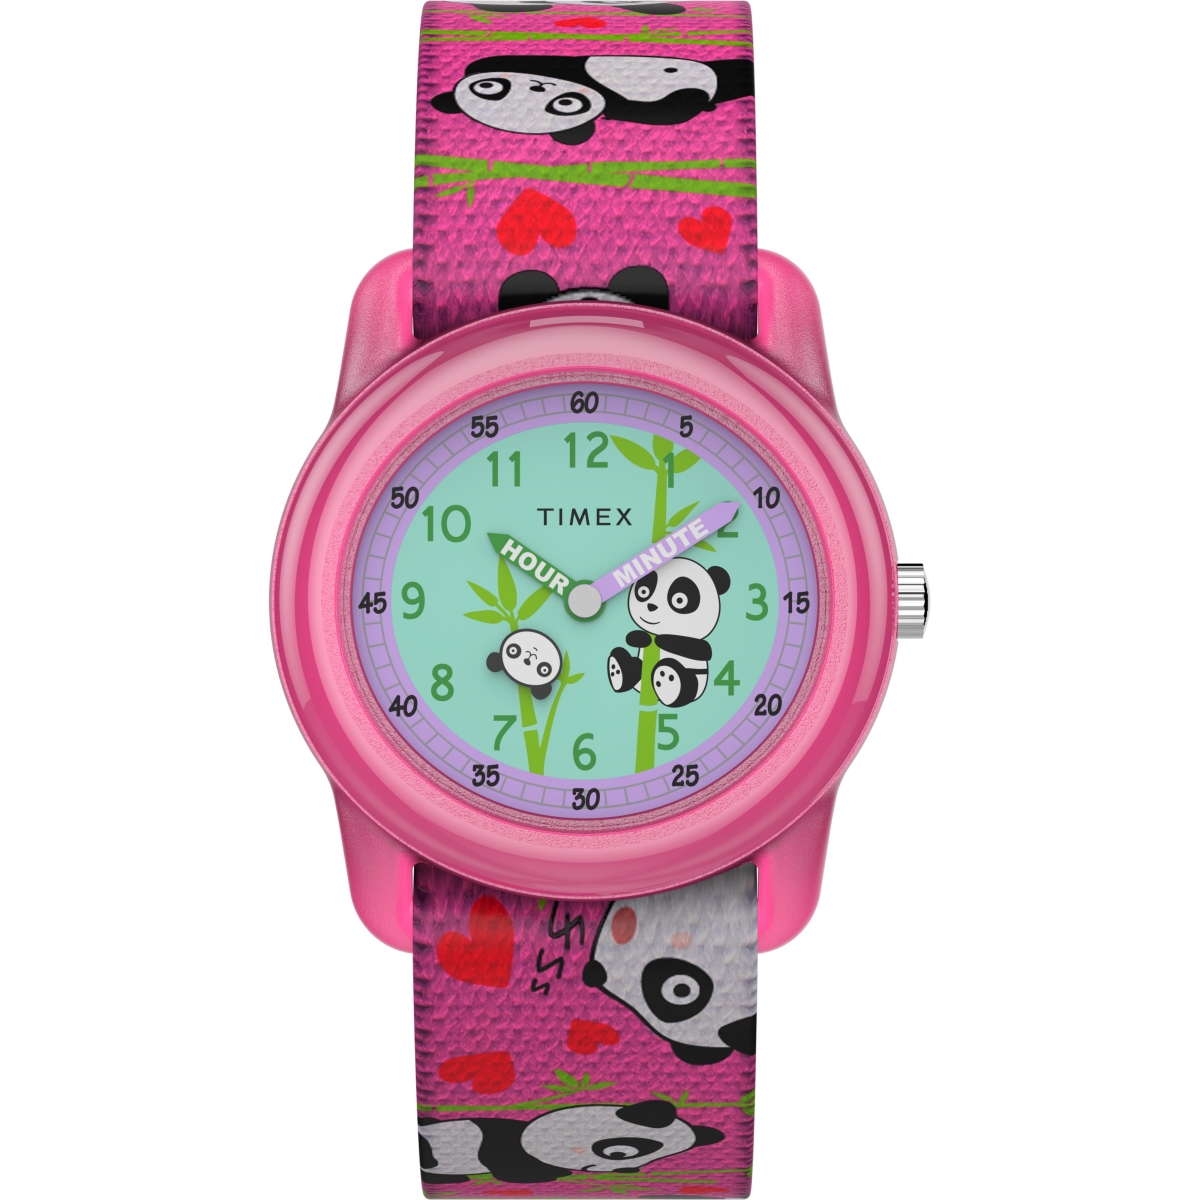 Tw7c771009j Girls Time Machines Pink & Pandas Elastic Fabric Strap Watch